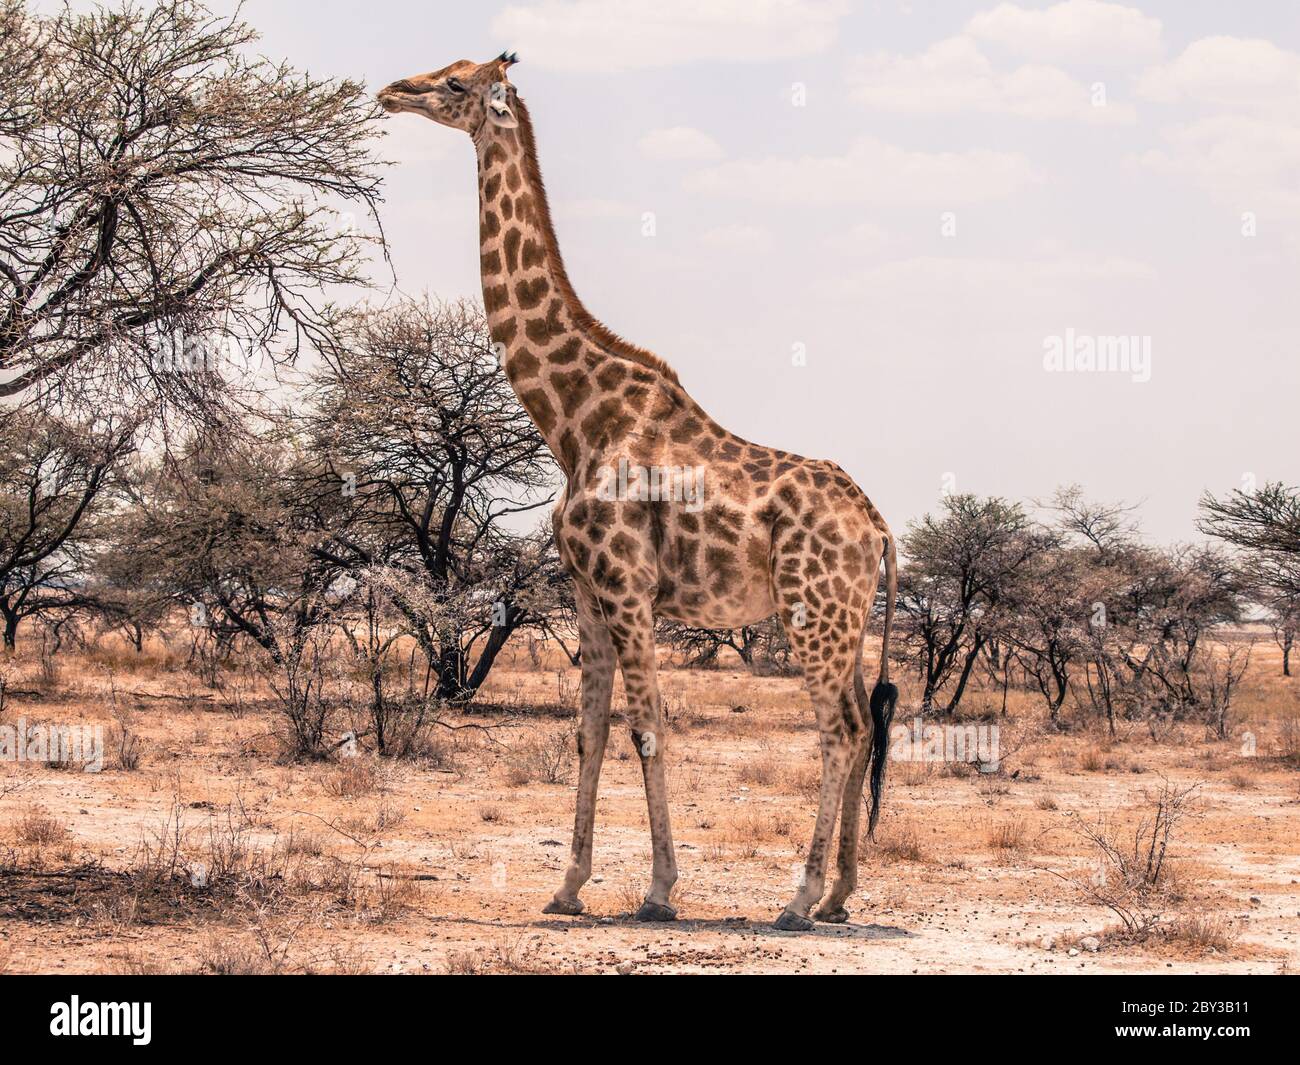 Beautiful giraffe feeding from tree in savanna. Stock Photo